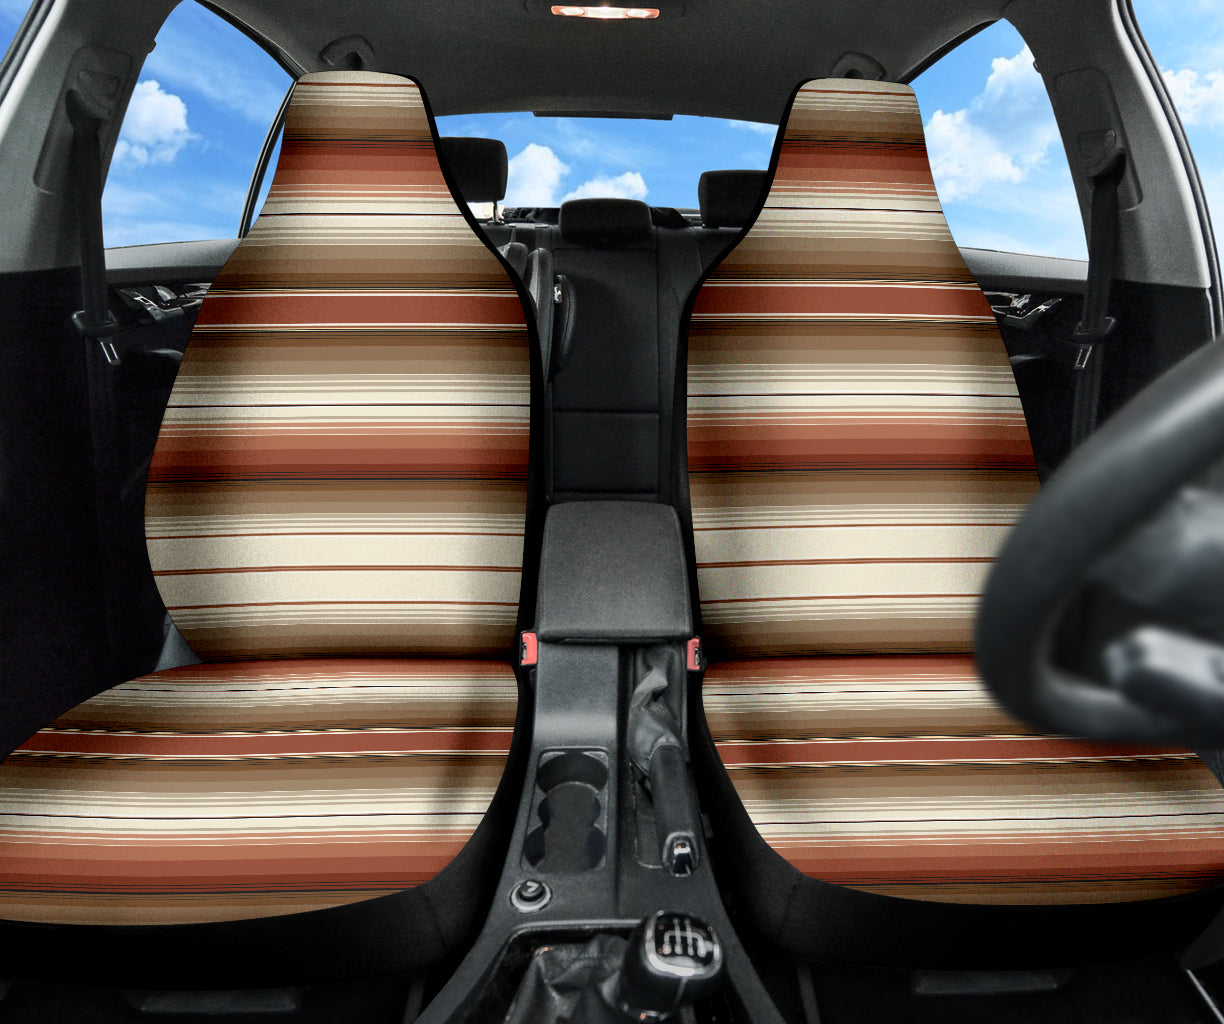 brown serape car seat covers, rust brown striped seat covers, Mexican blanket print, Southwestern, Baja